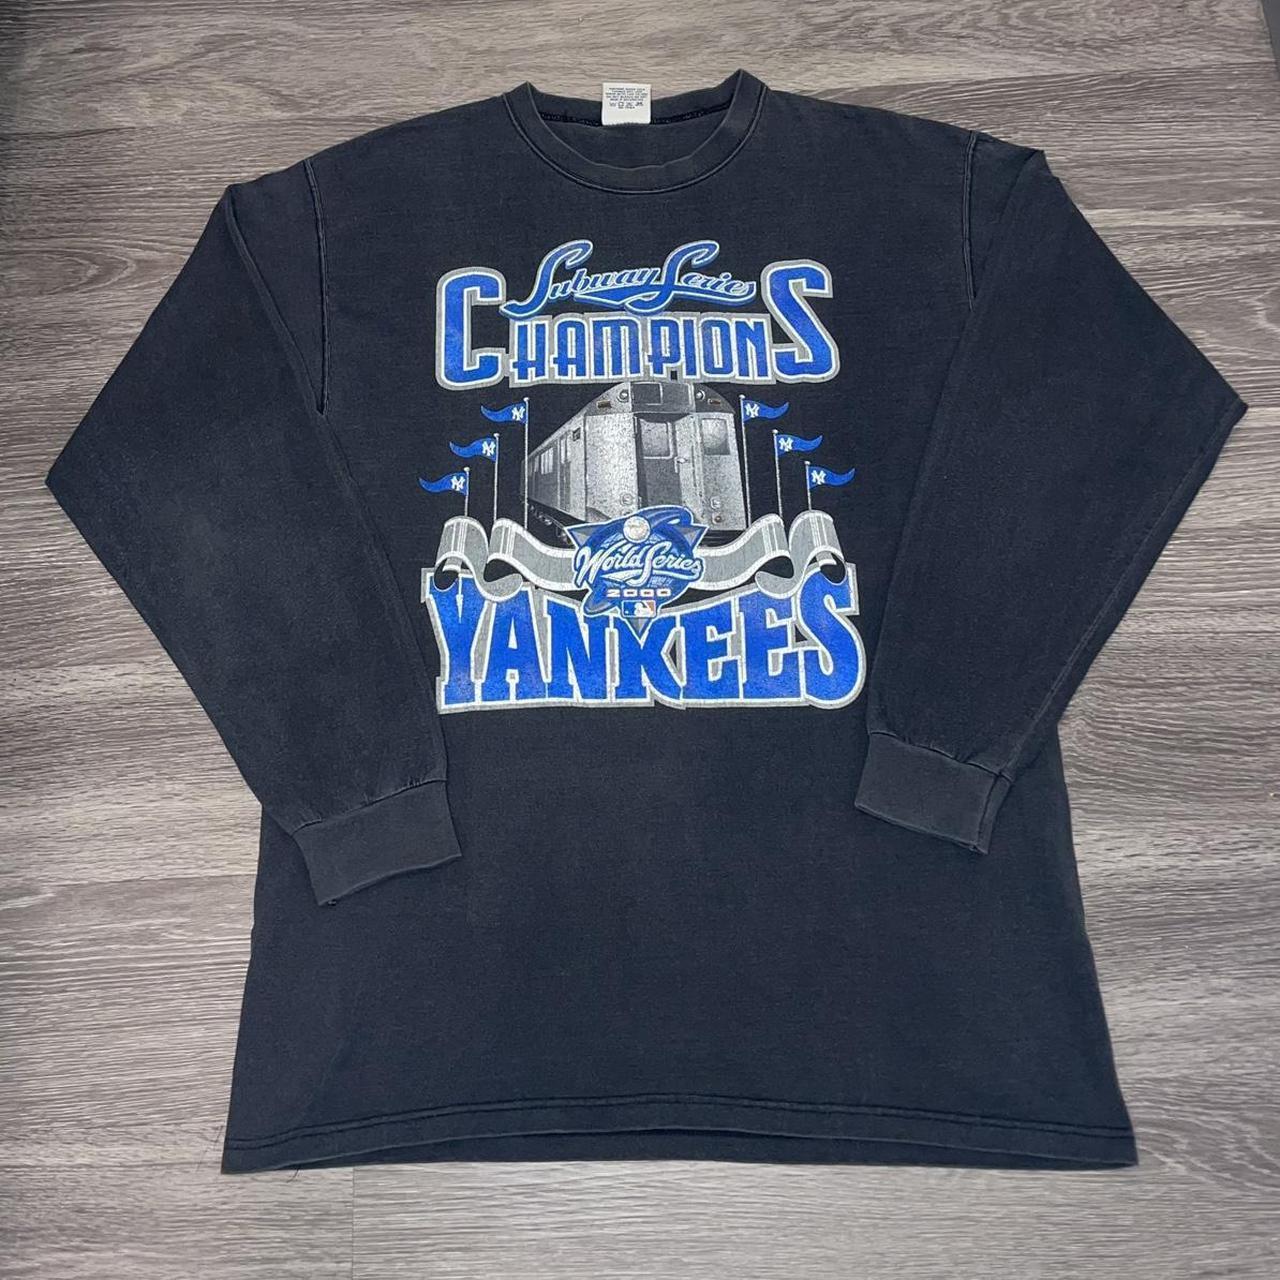 Vintage 2000 MLB Yankees Subway Series Championship Longsleeve T Shirt